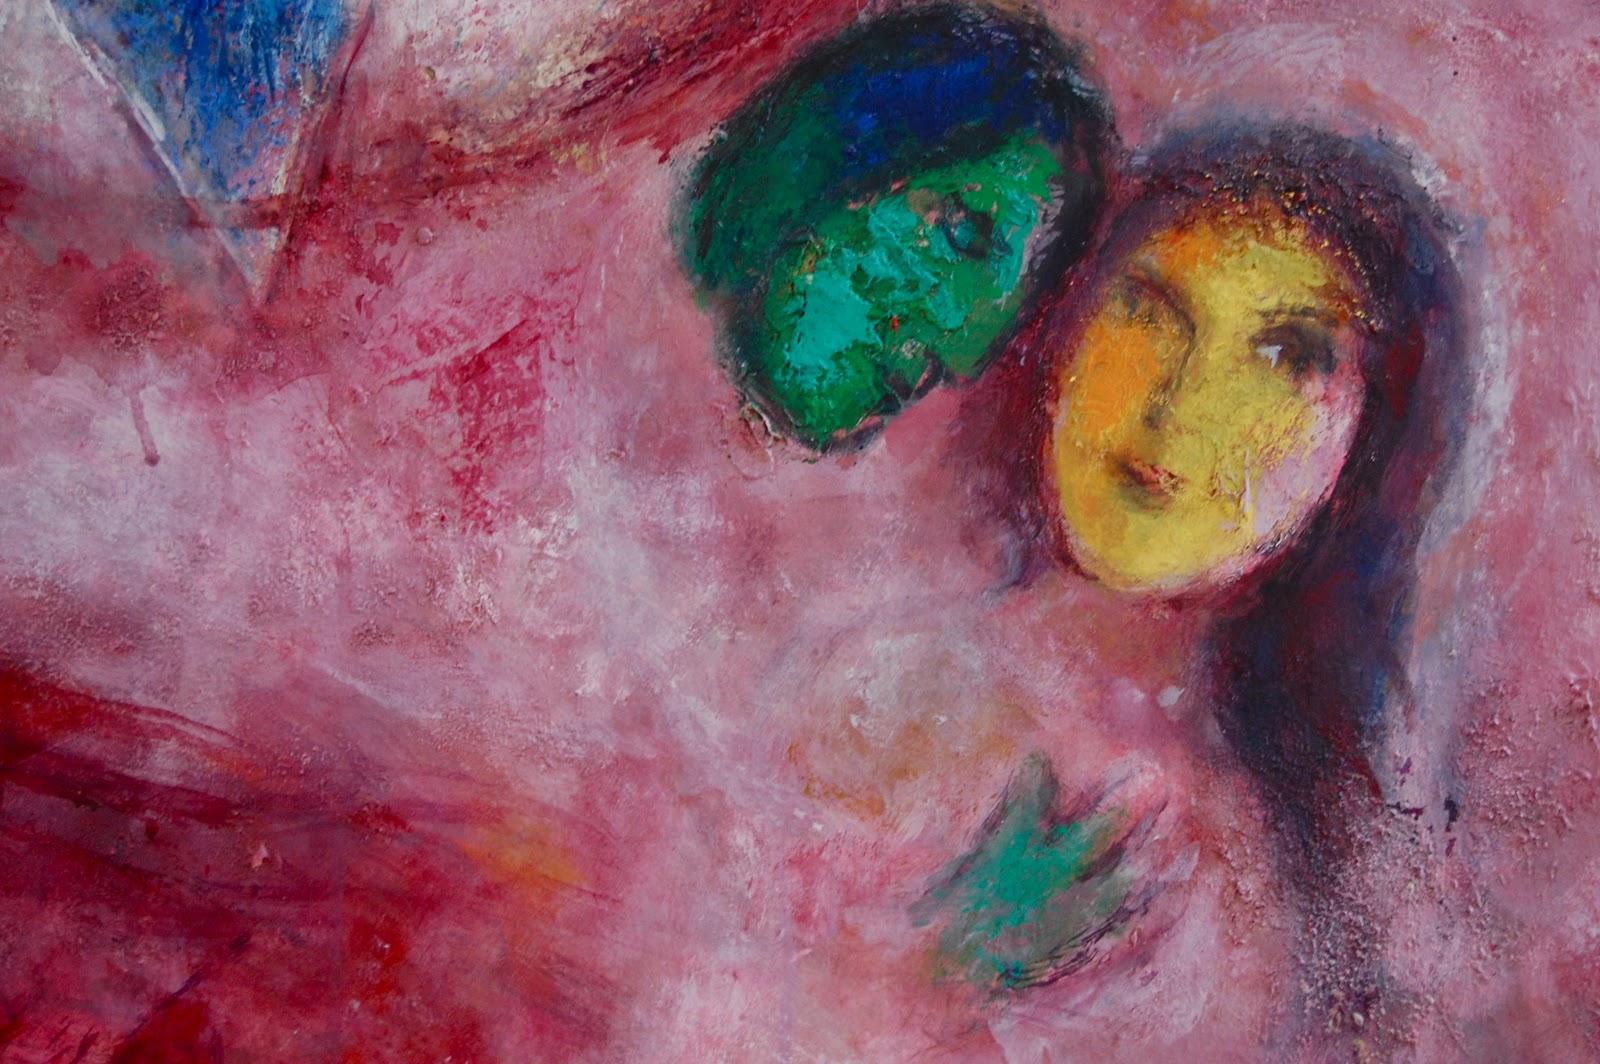 Marc+Chagall-1887-1985 (404).jpg